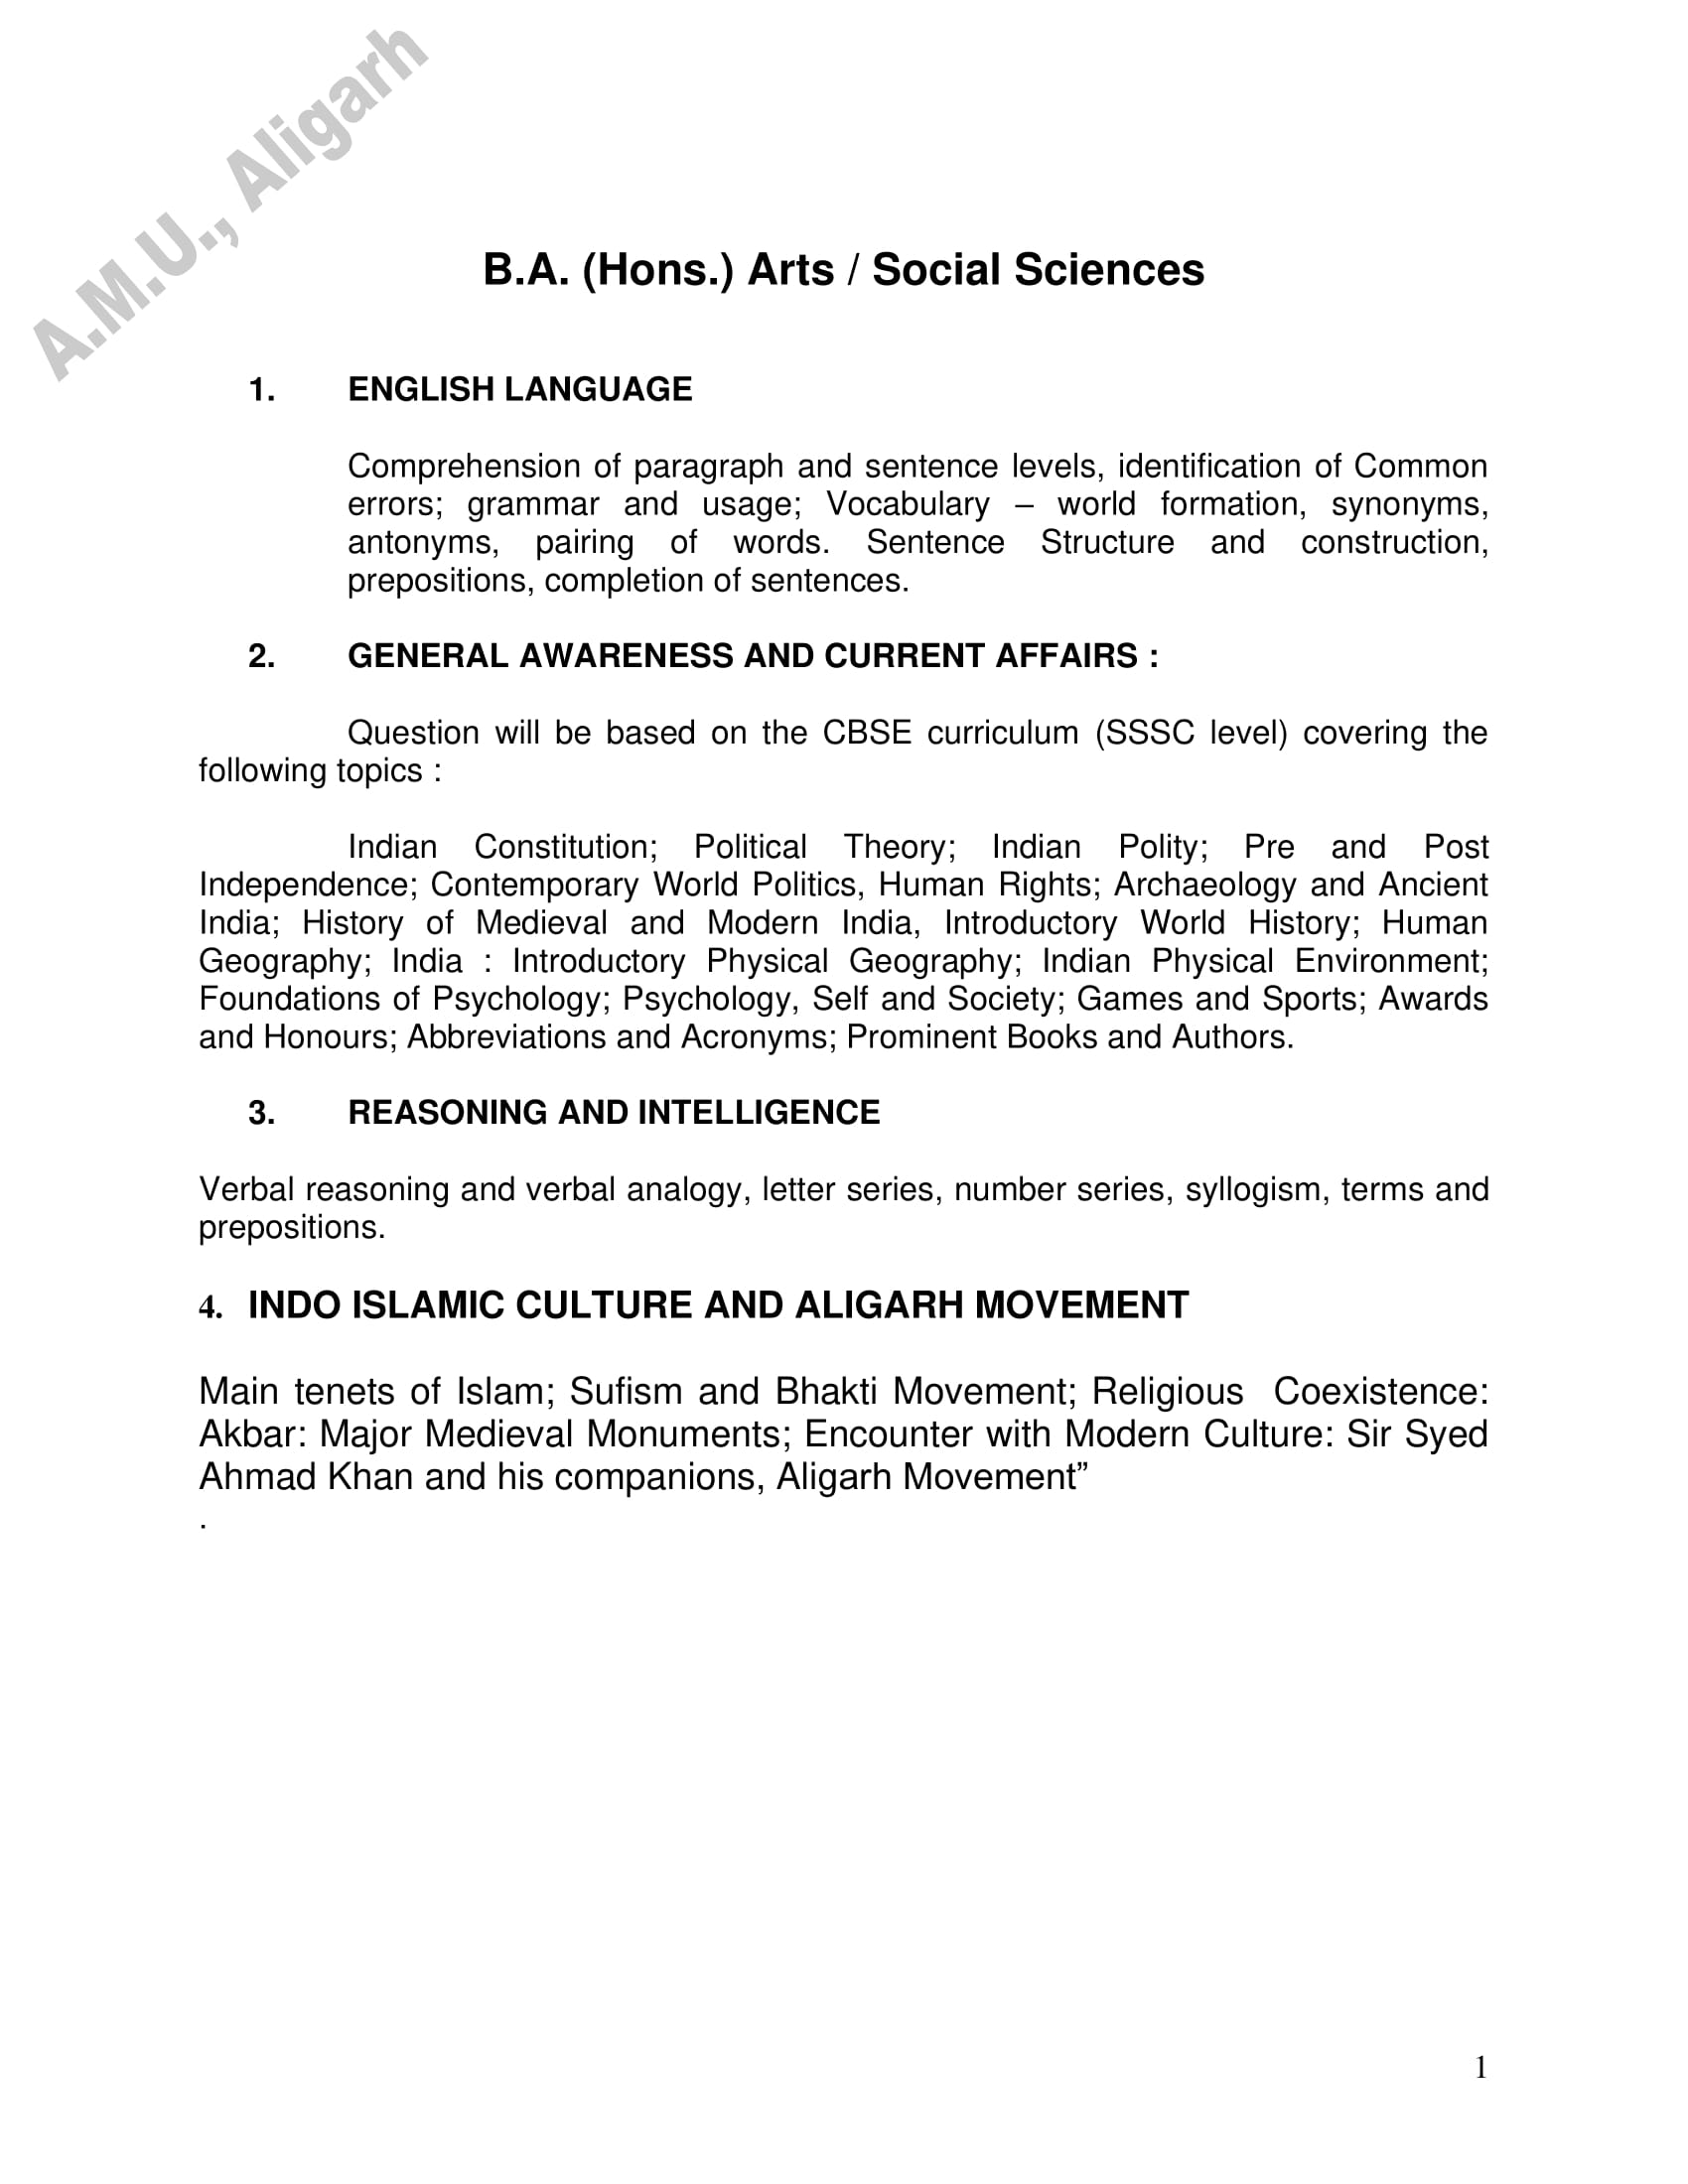 AMU Entrance Exam Syllabus for BA in Arts and Social Sciences - Page 1